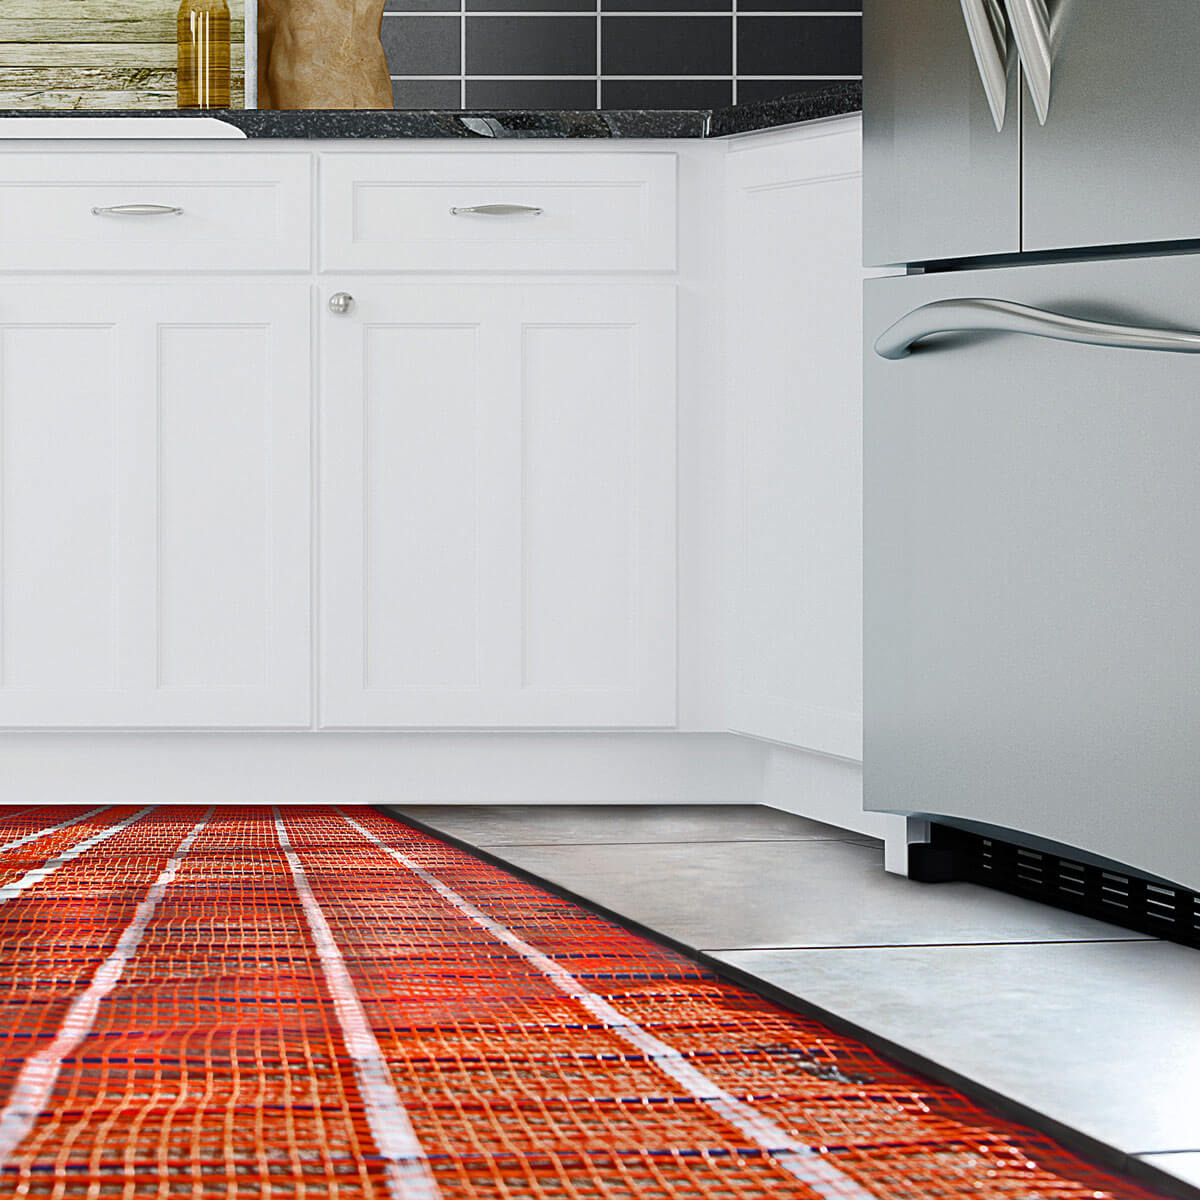 Electric Radiant Floor Heat, Electric Heated Tile Floor